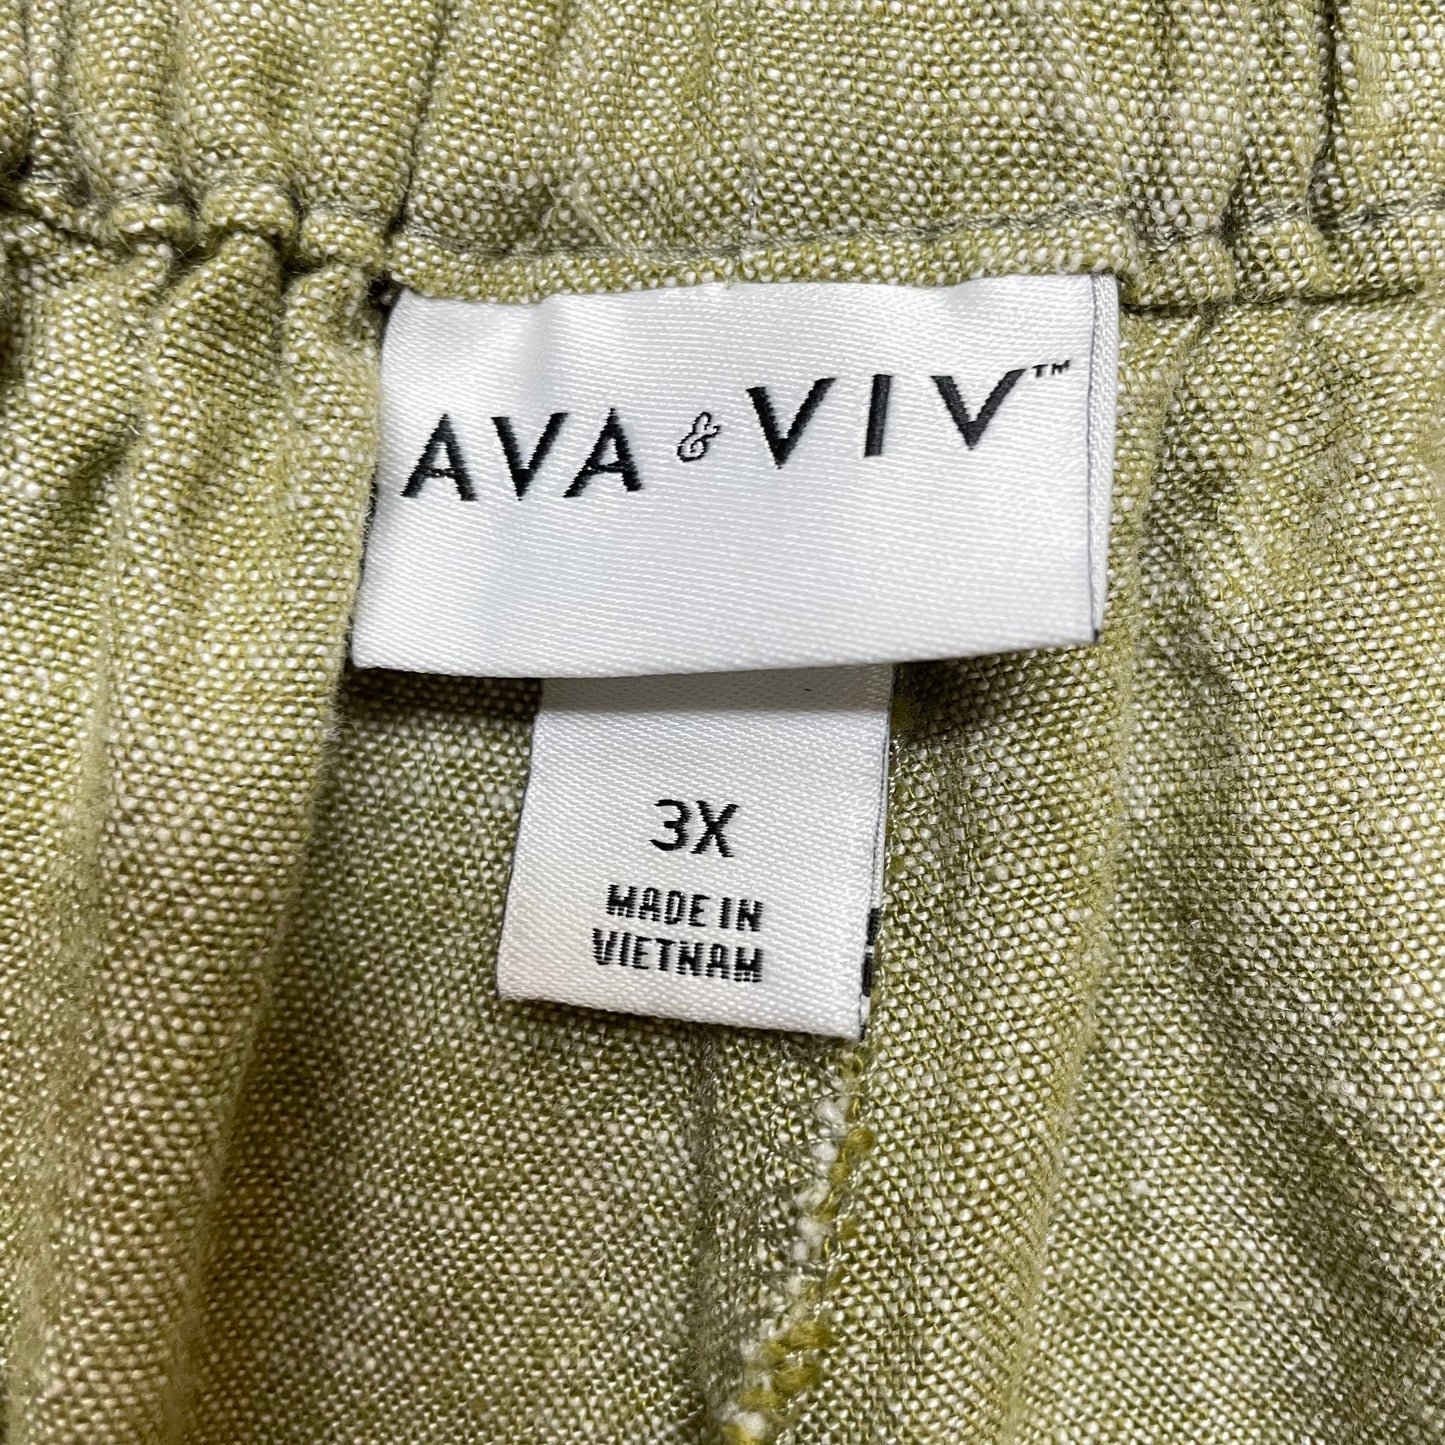 Green & Tan Shorts By Ava & Viv, Size: 3x